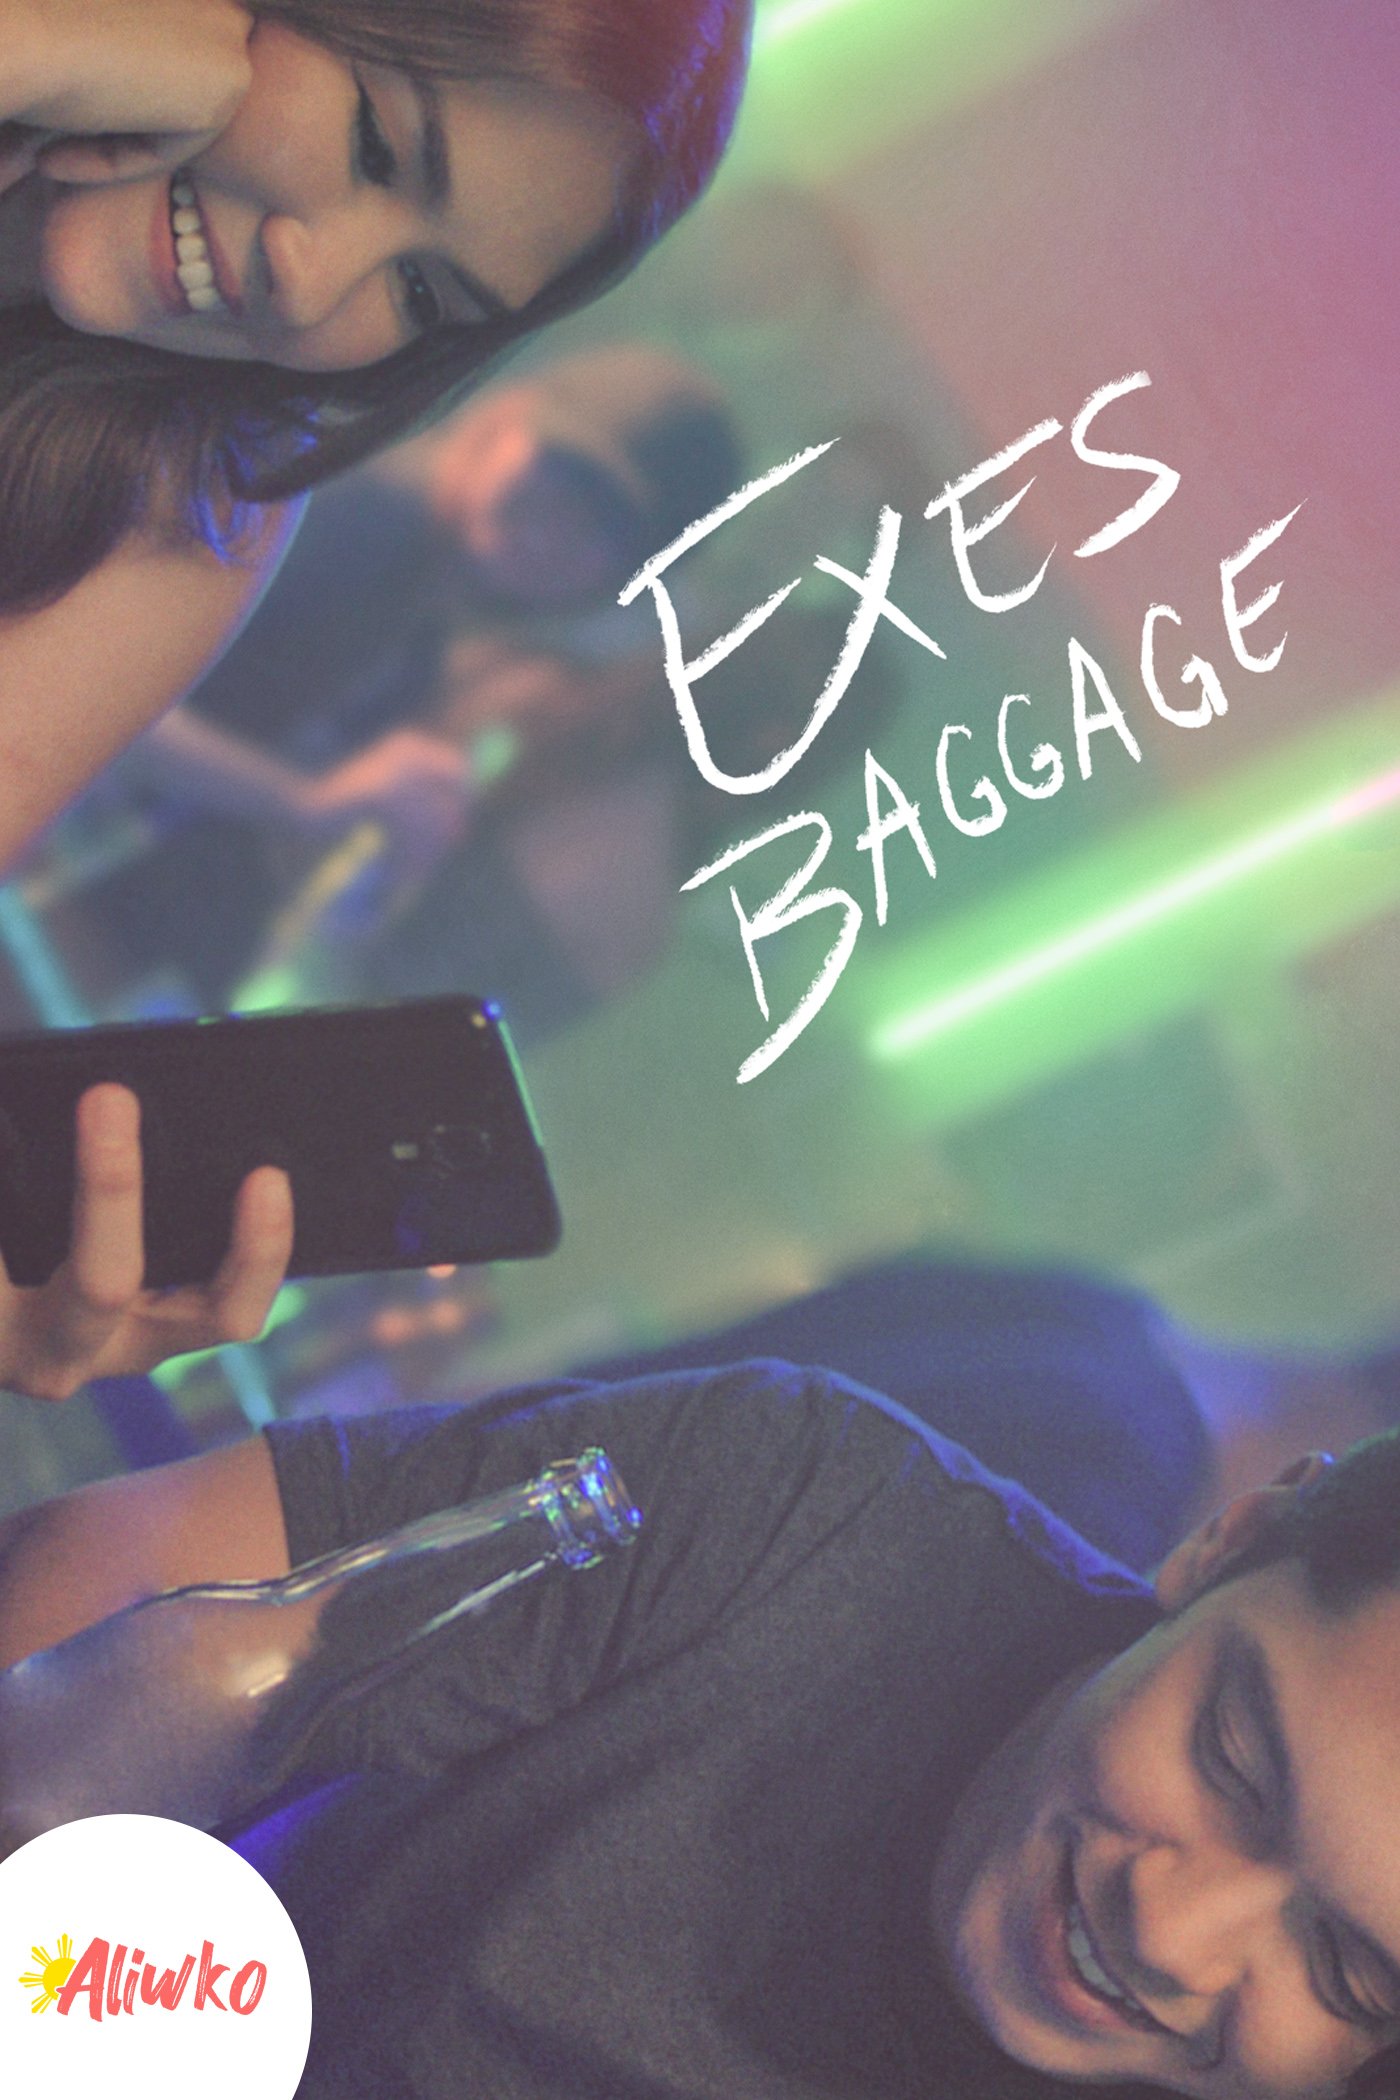 Aliwko_Exes Baggage.jpg